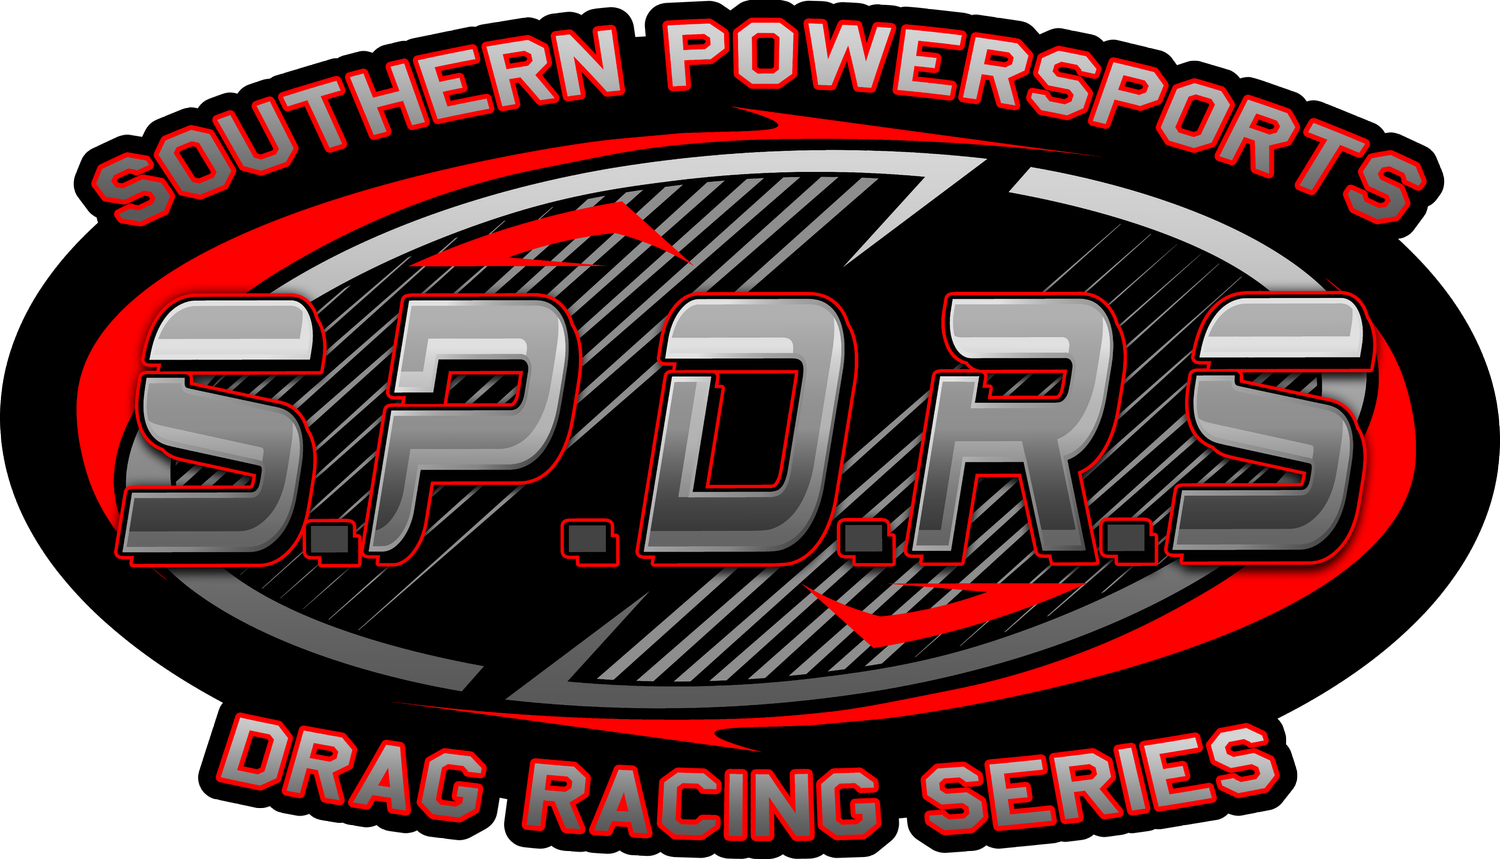 Southern Powersports Drag Racing Series